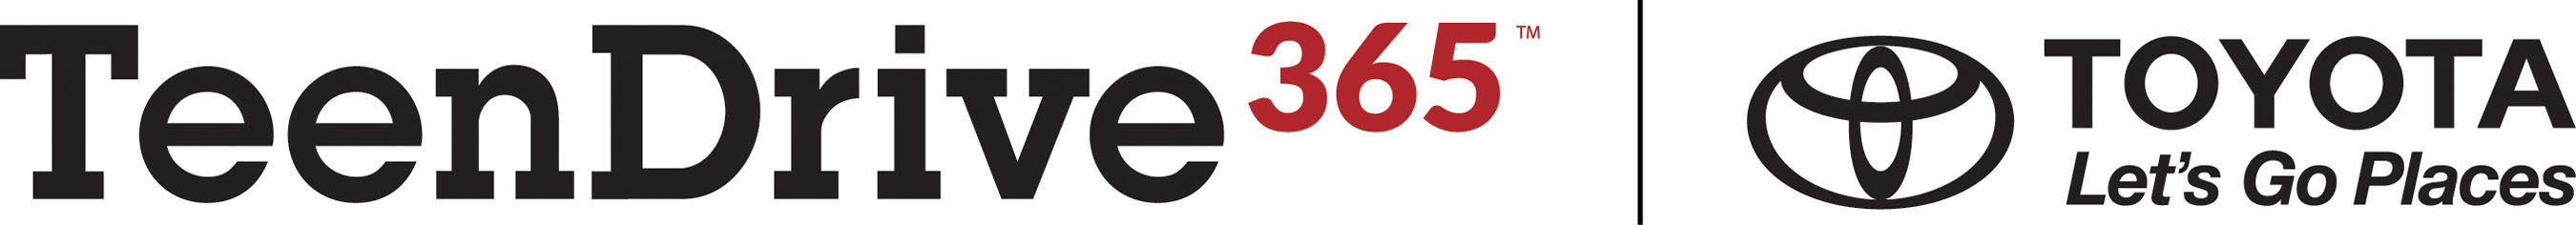 TeenDrive365 logo. (PRNewsFoto/Toyota) (PRNewsFoto/TOYOTA)